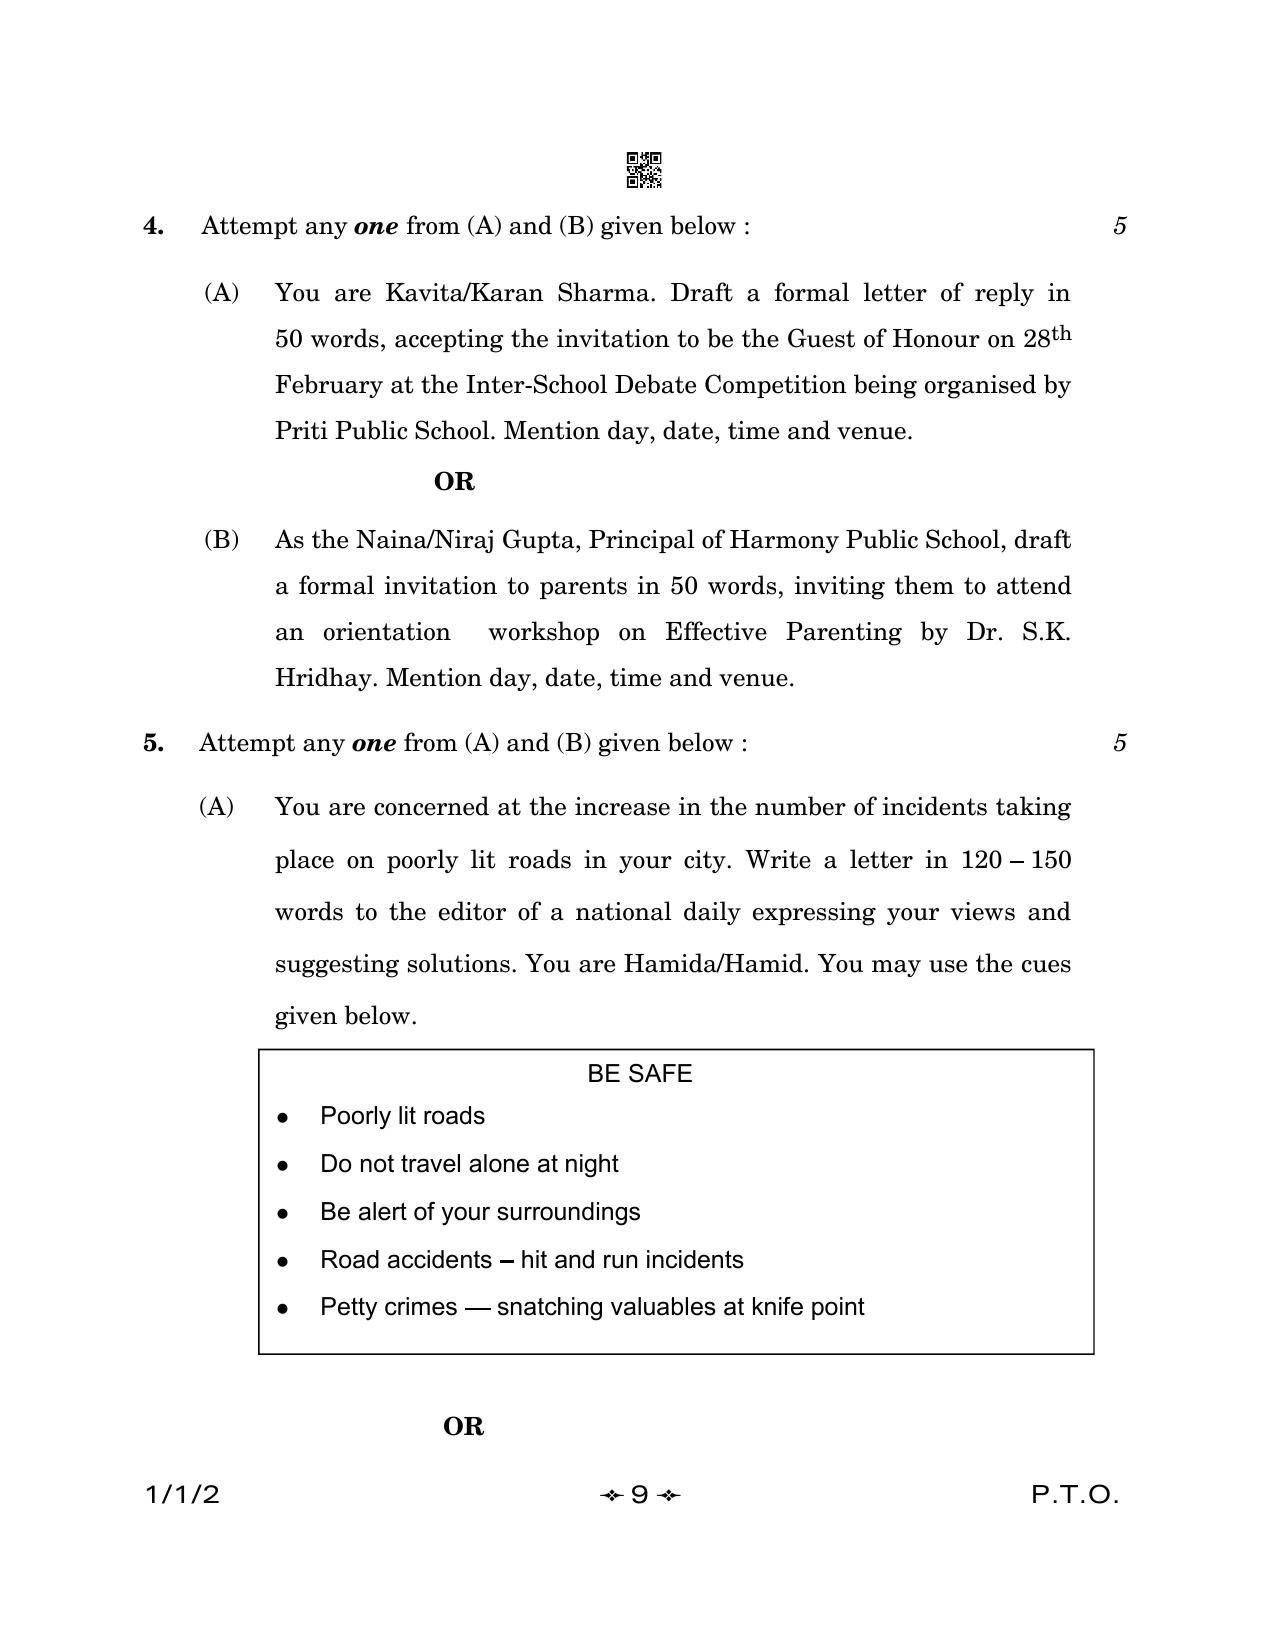 CBSE Class 12 1-1-2 English Core 2023 Question Paper - Page 9